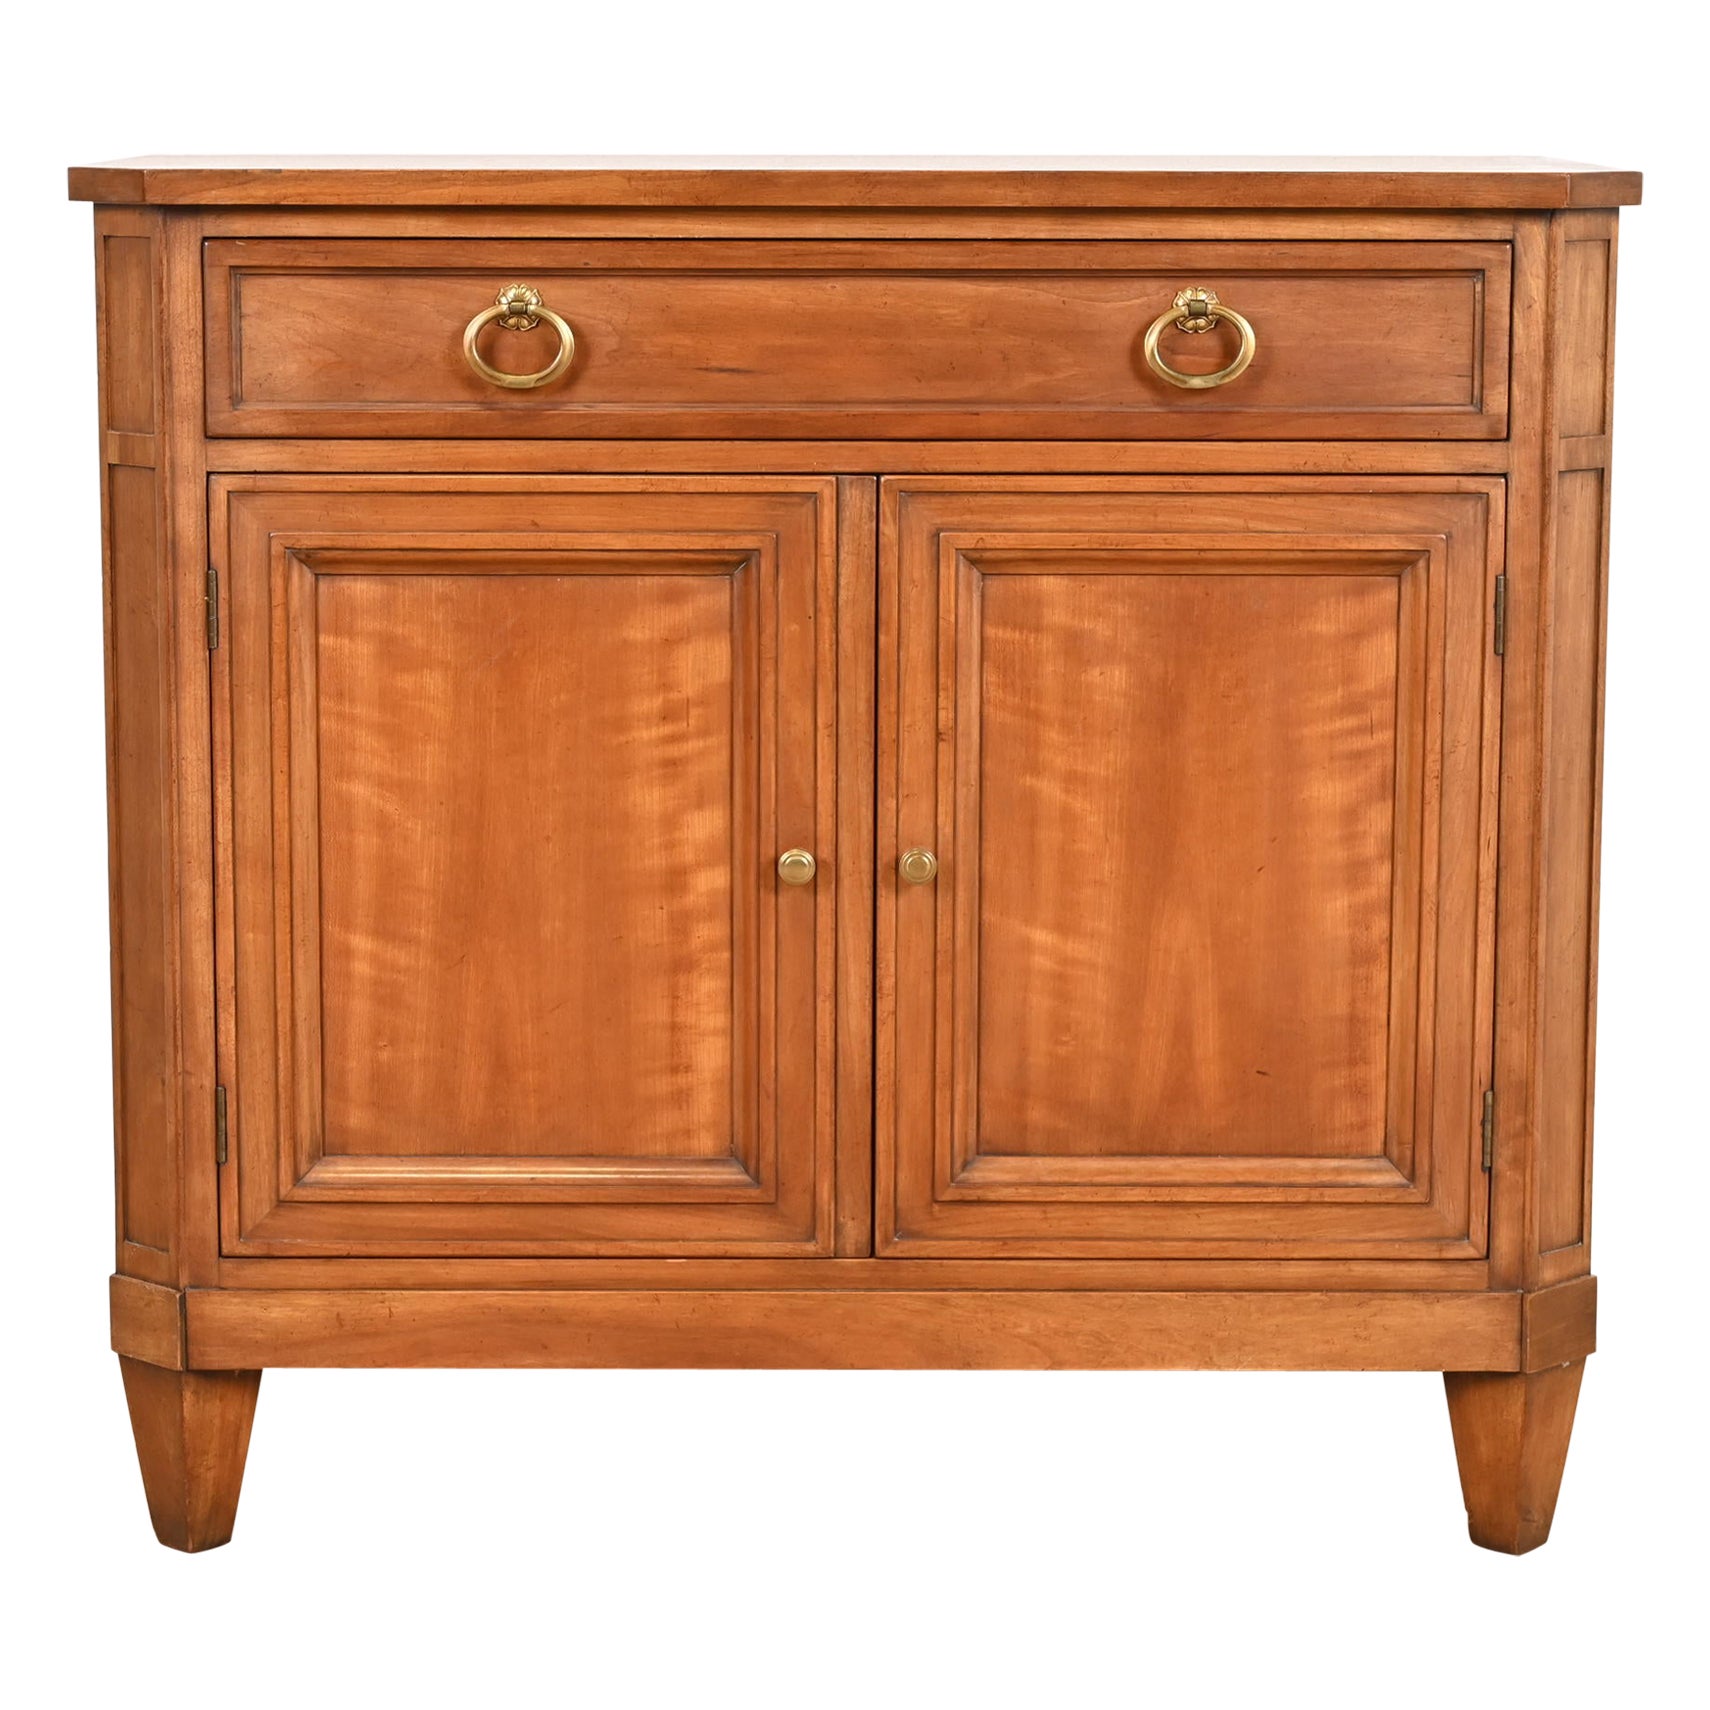 Kindel Furniture French Regency Louis XVI Cherry Wood Server or Bar Cabinet